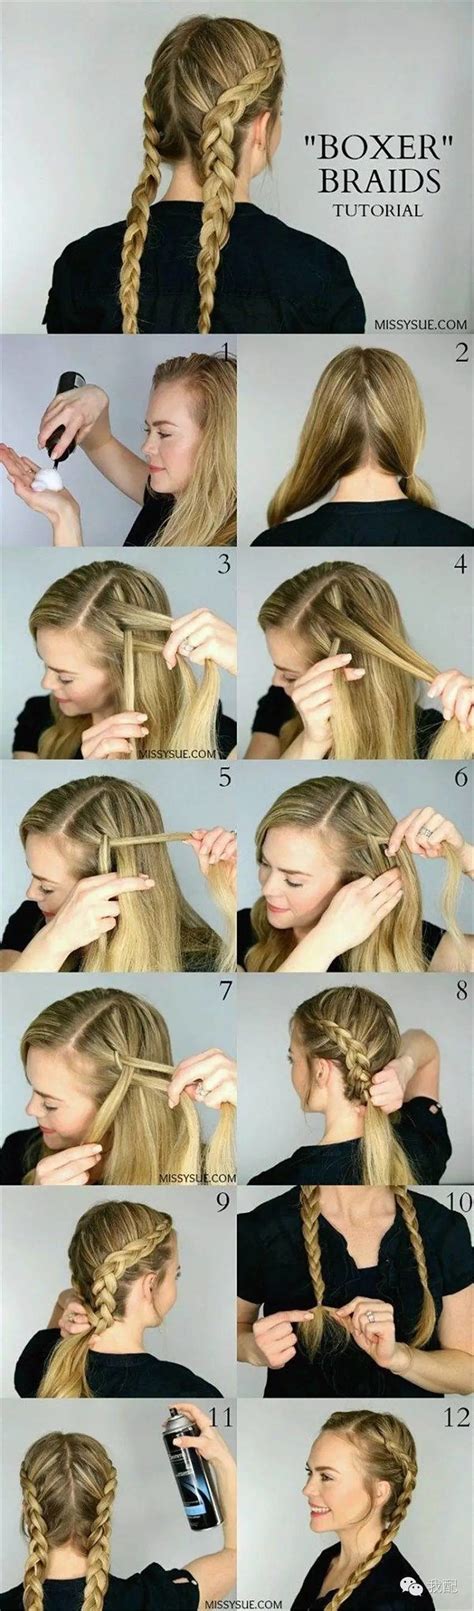 7 Easy And Creative Dutch Braid Hair Tutorials Gymbuddy Now